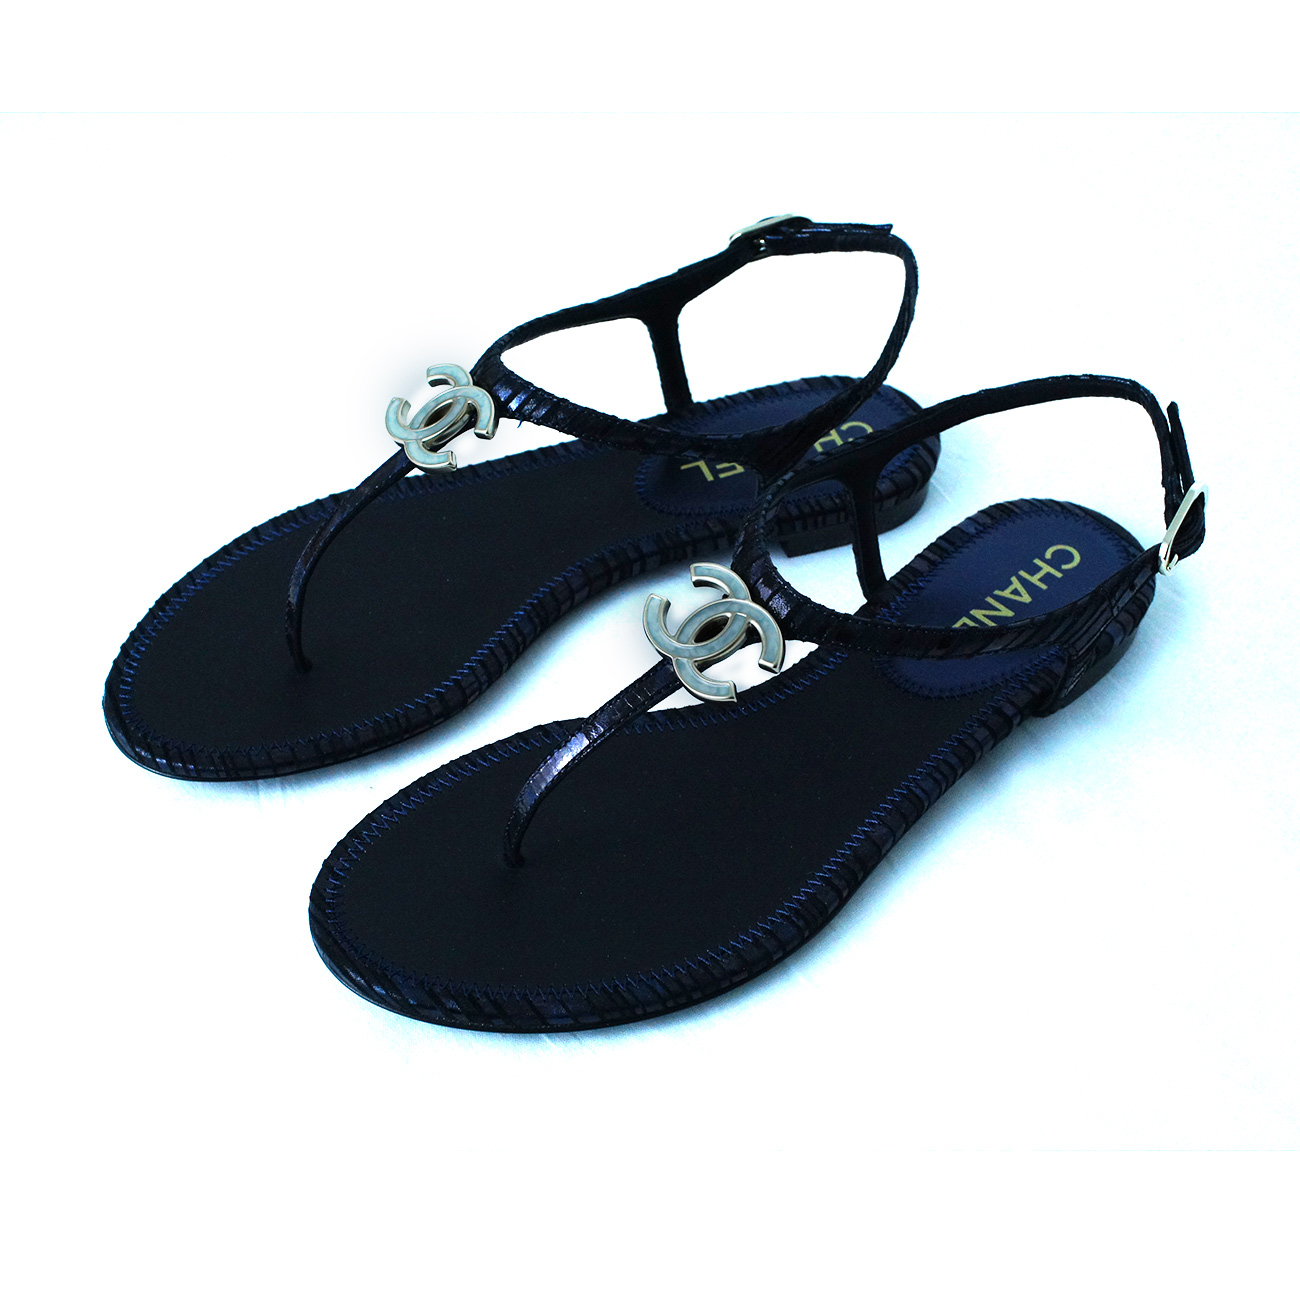 chanel cc sandals